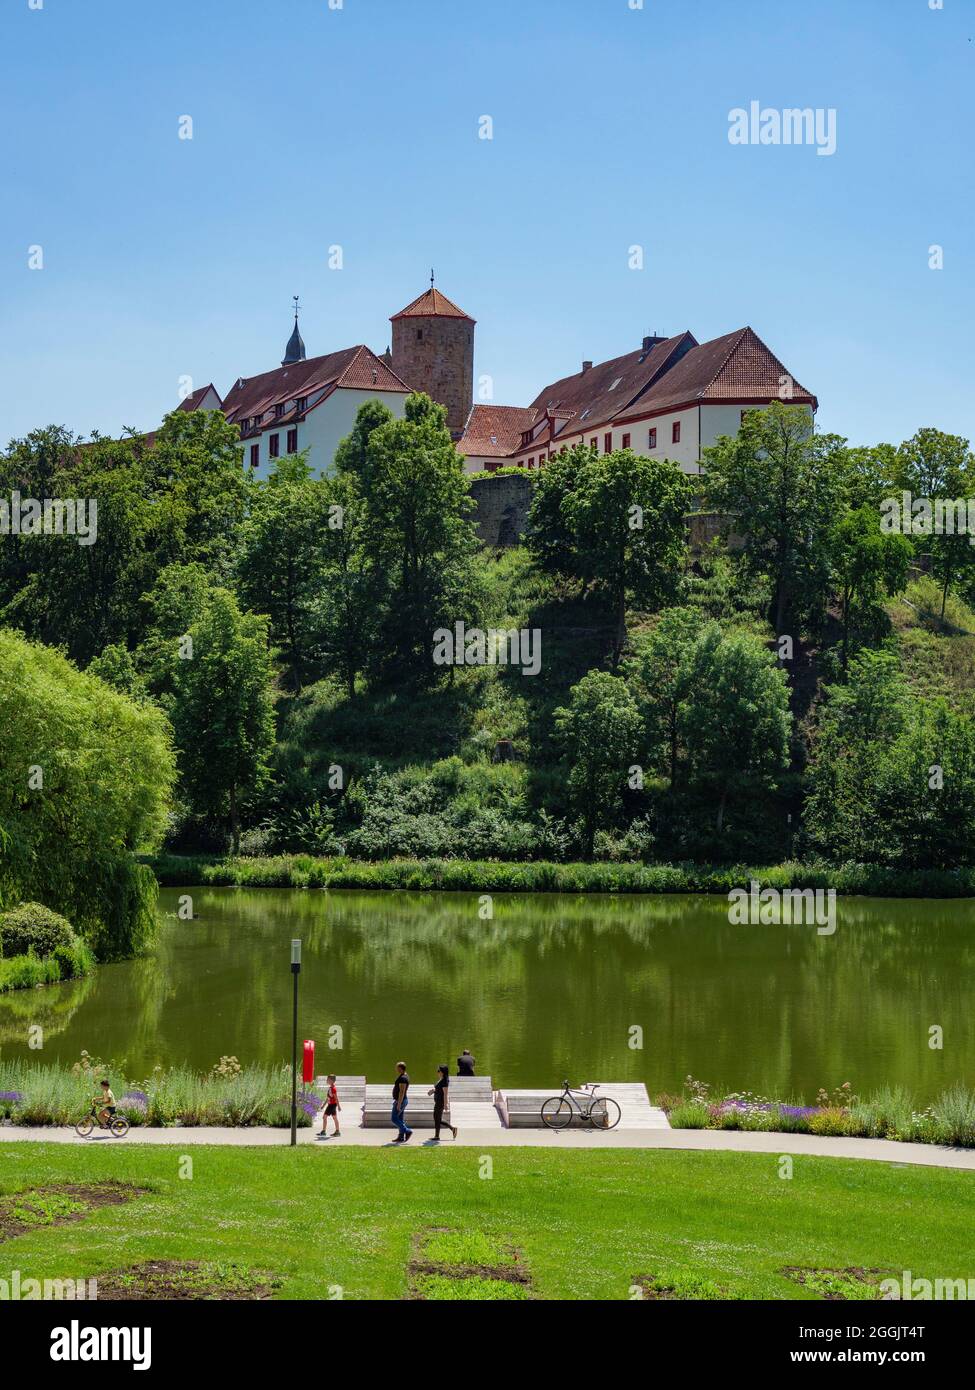 Castello di Iburg, Bad Iburg, Foresta di Teutoburg, Osnabruecker Land, bassa Sassonia, Germania Foto Stock